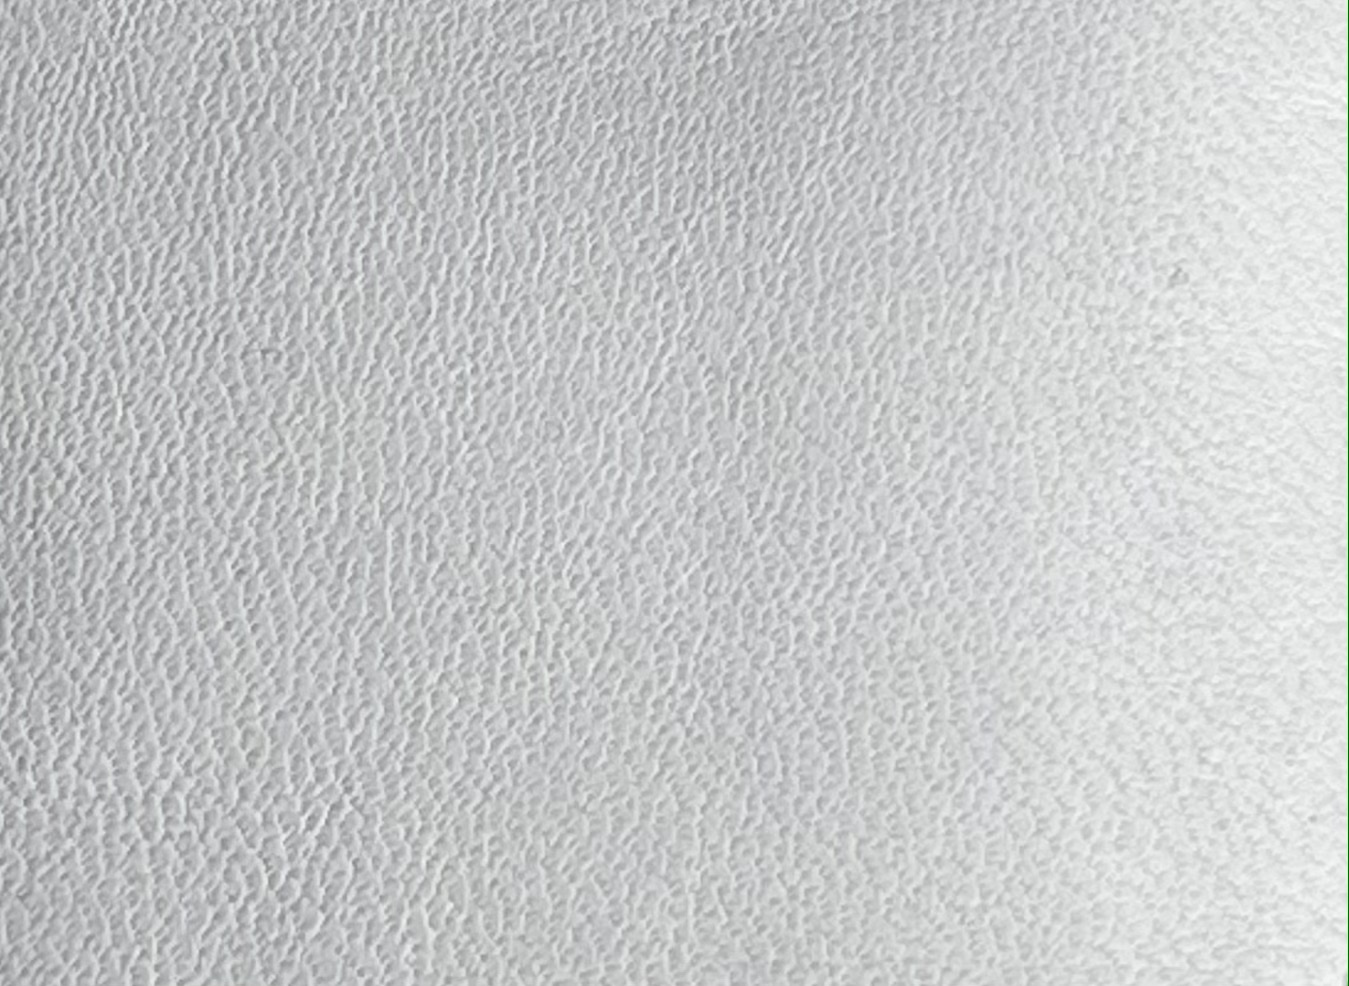 Emilia sneakers in white leather